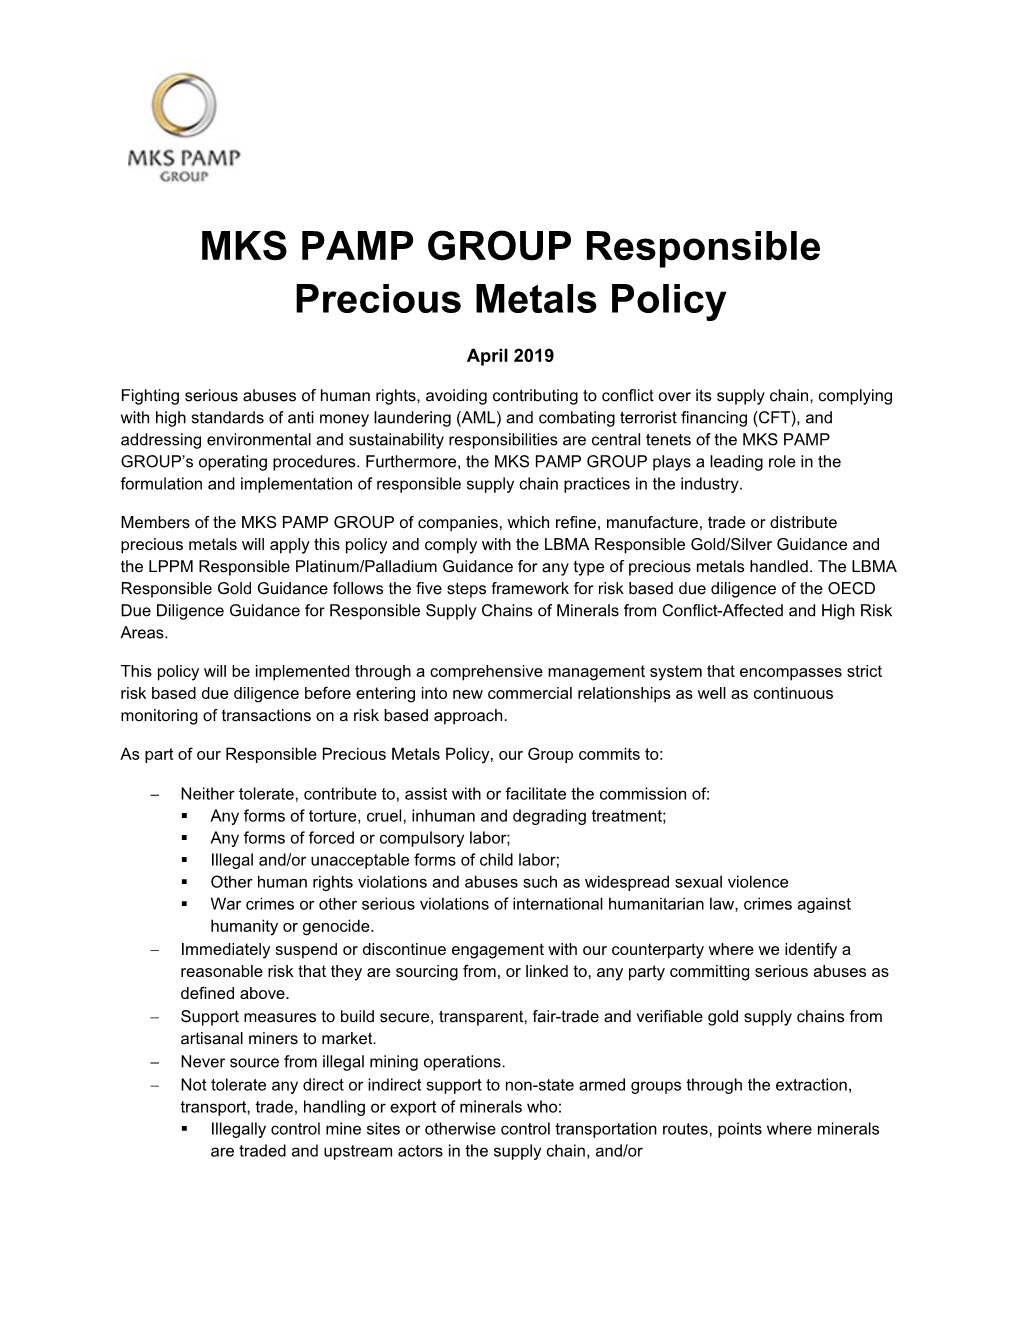 MKS PAMP GROUP Responsible Precious Metals Policy